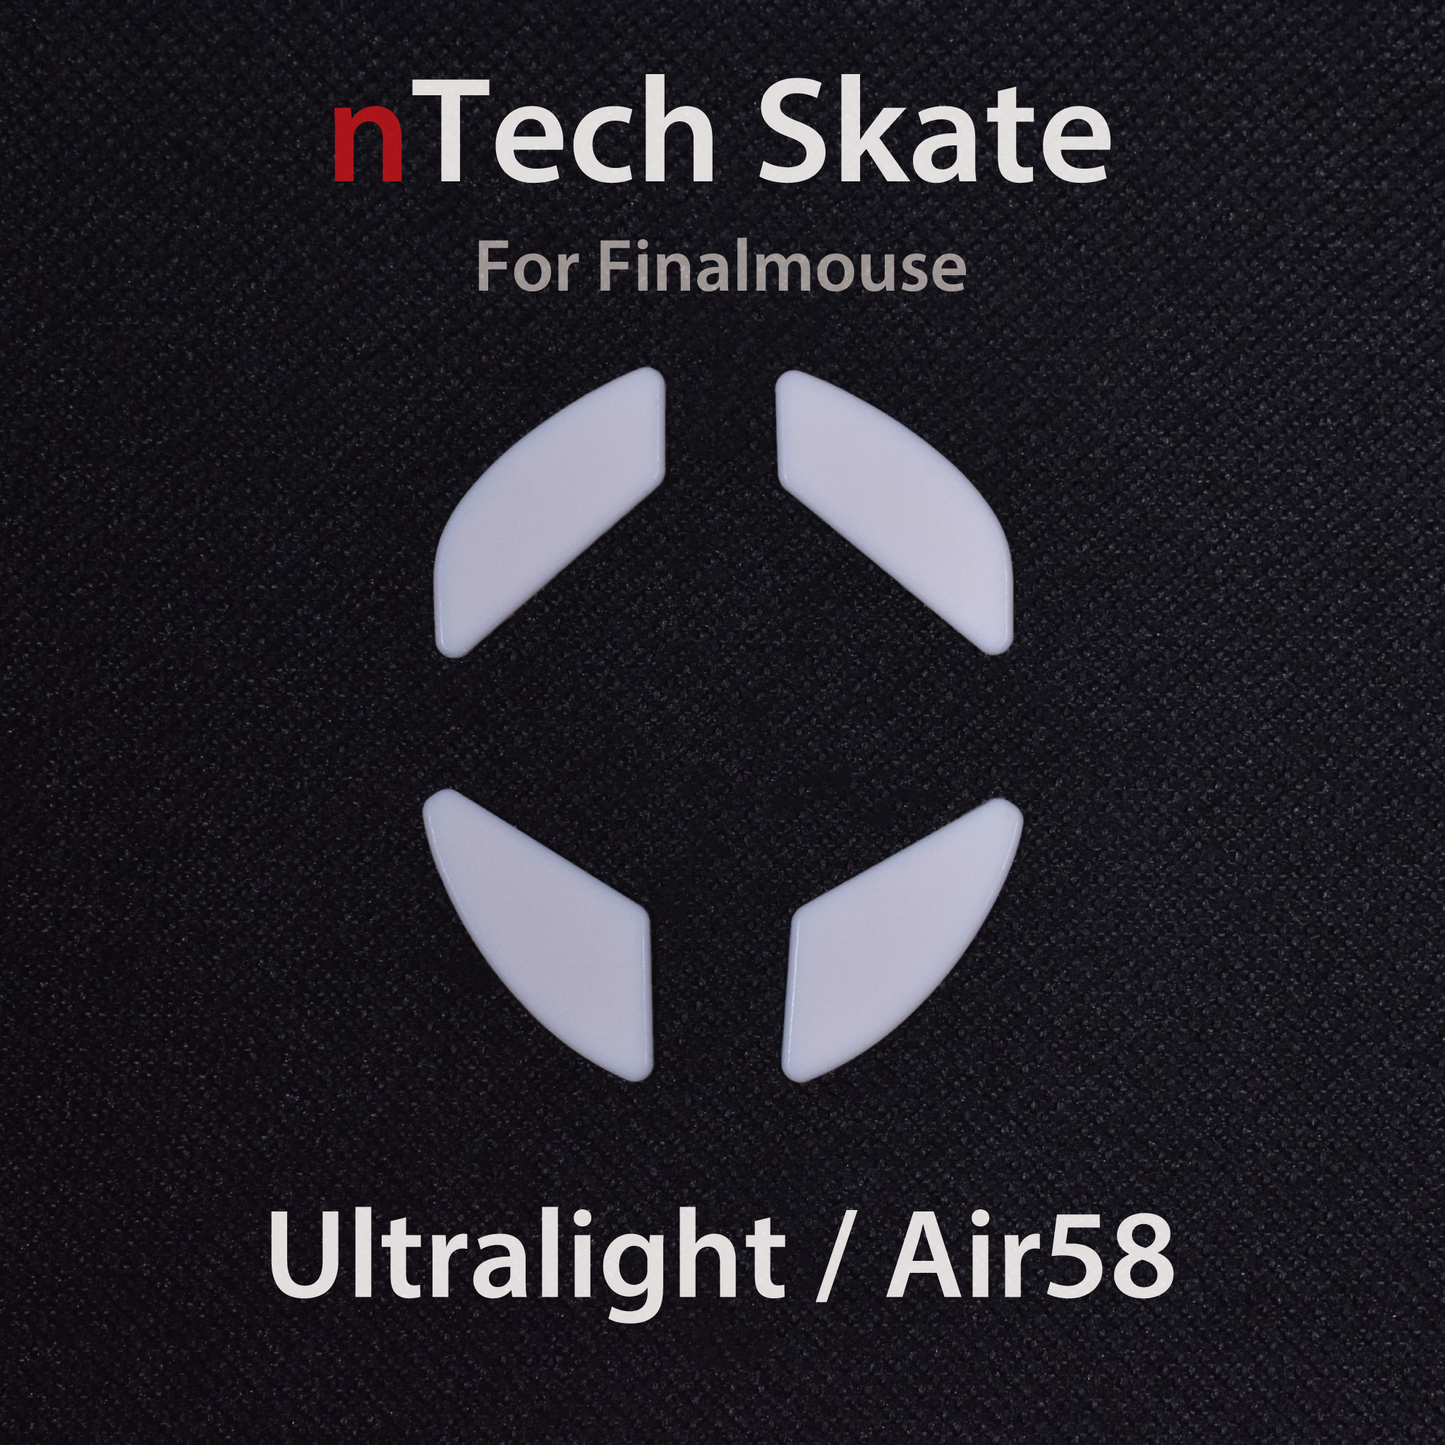 nTech Skate for Finalmouse Ultralight / Air58 x 1set 100% PTFE/Duracon® Material